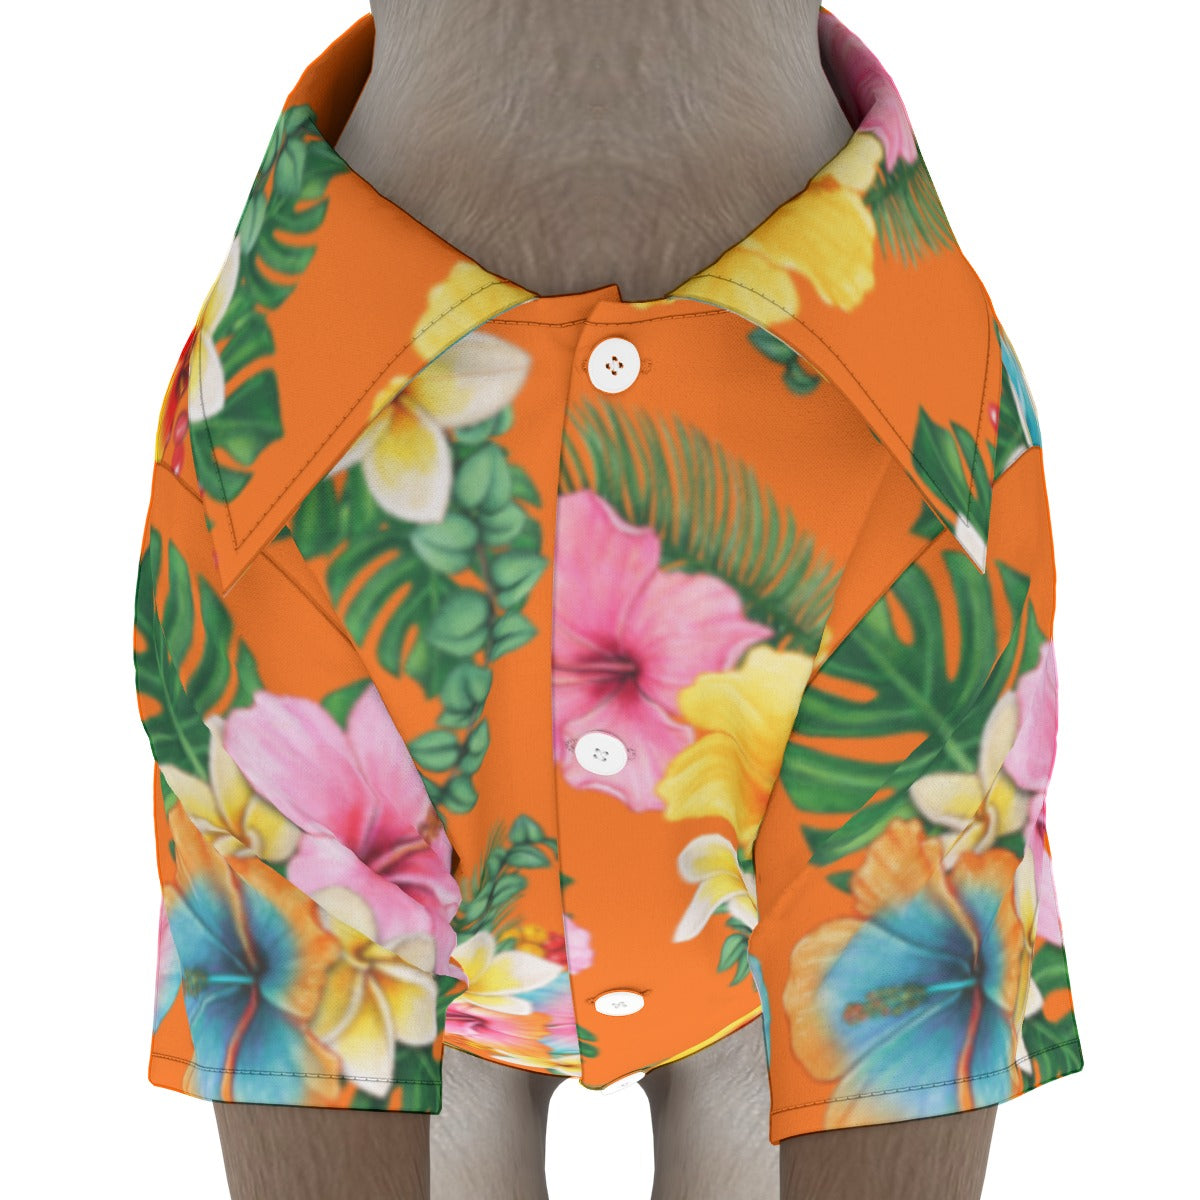 Tropicana Pet‘s Hawaiian Shirt